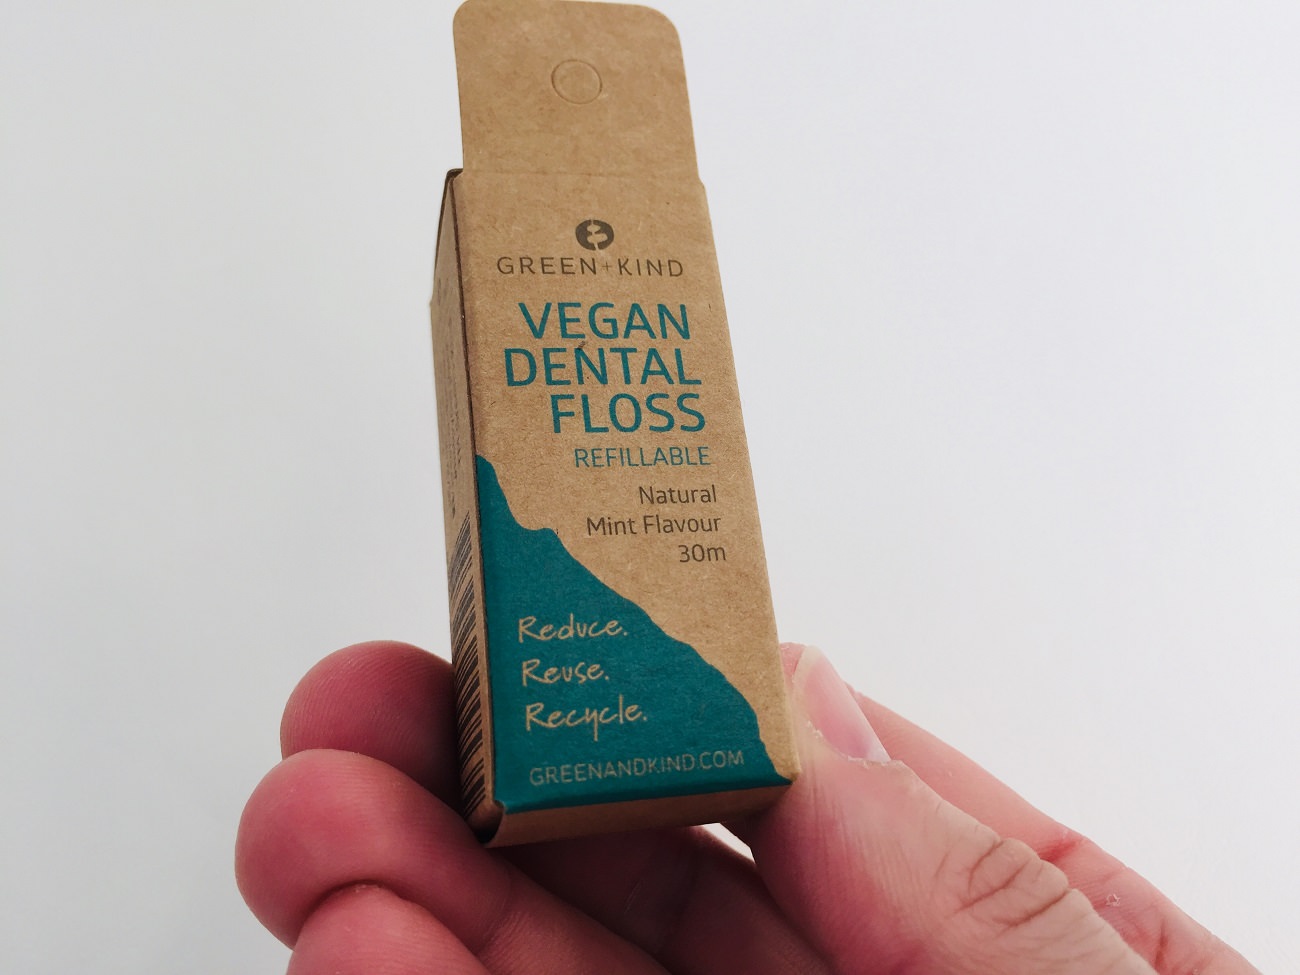 Holding the Green+Kind vegan dental floss packaging in my fingers